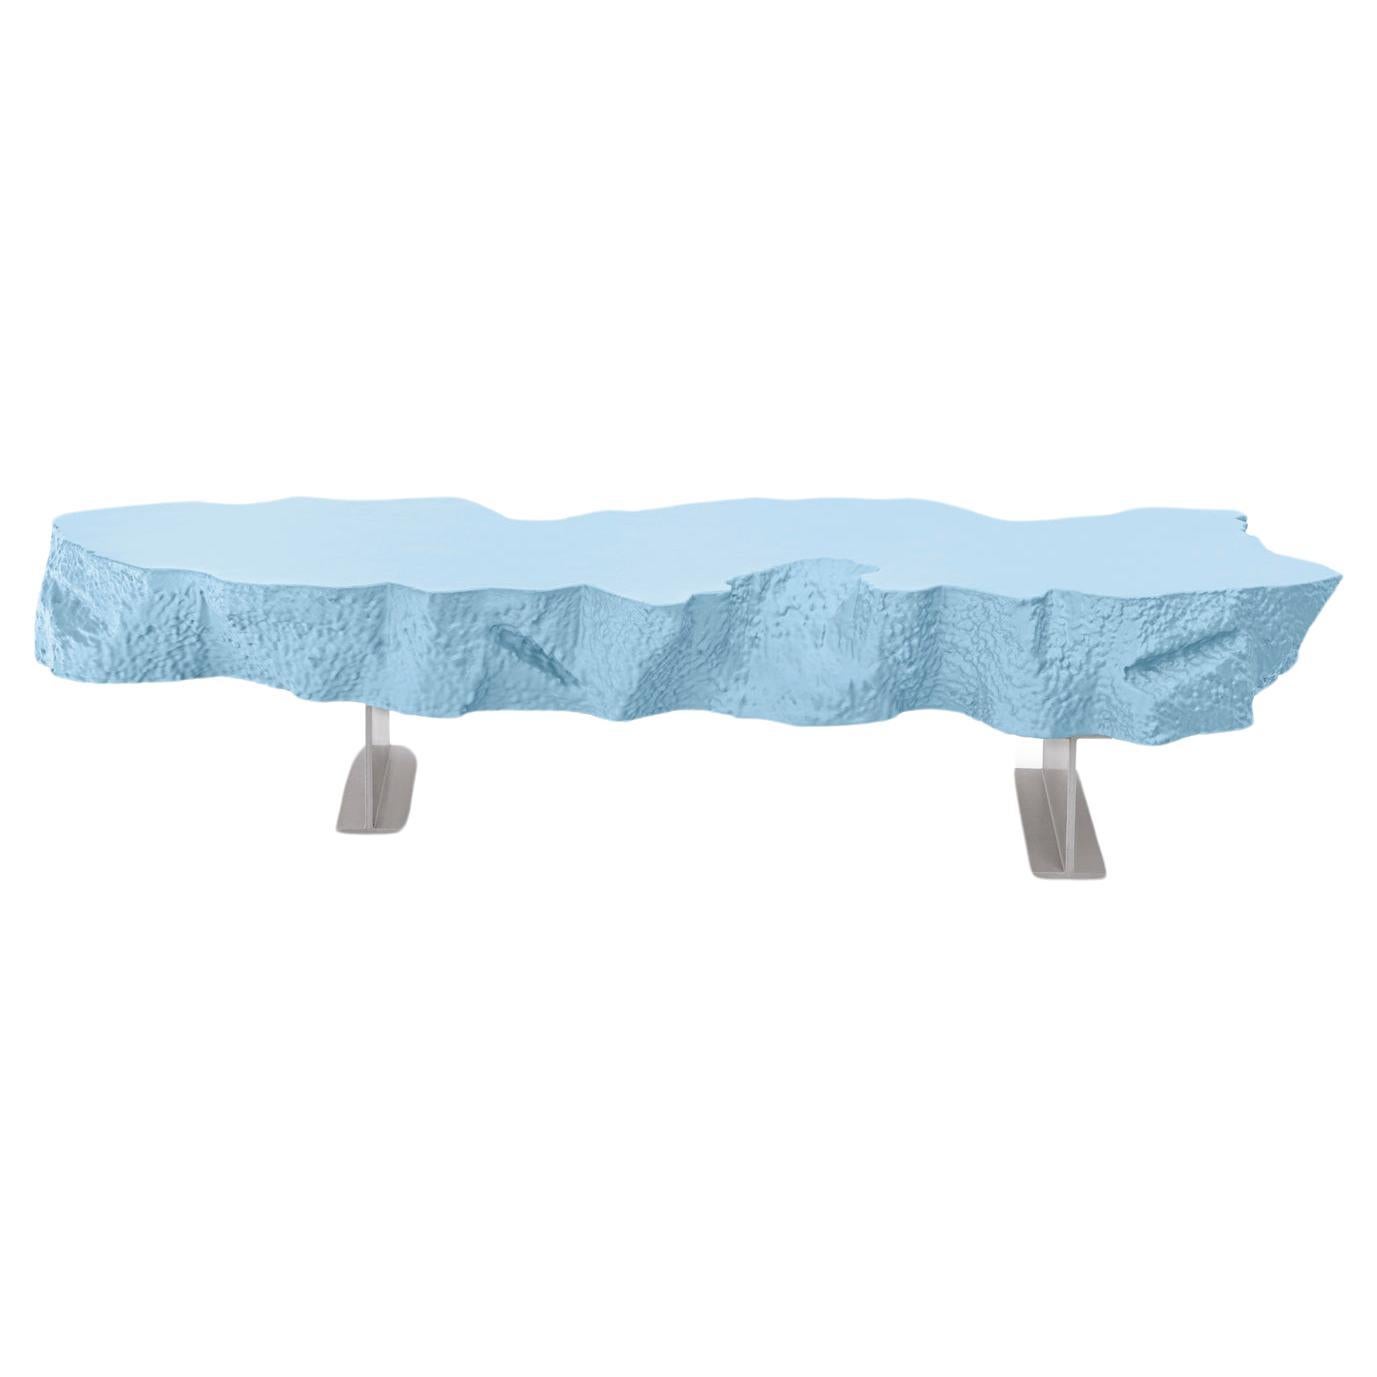 Gufram Broken Bench by Snarkitecture - Blue edition 1/33 For Sale